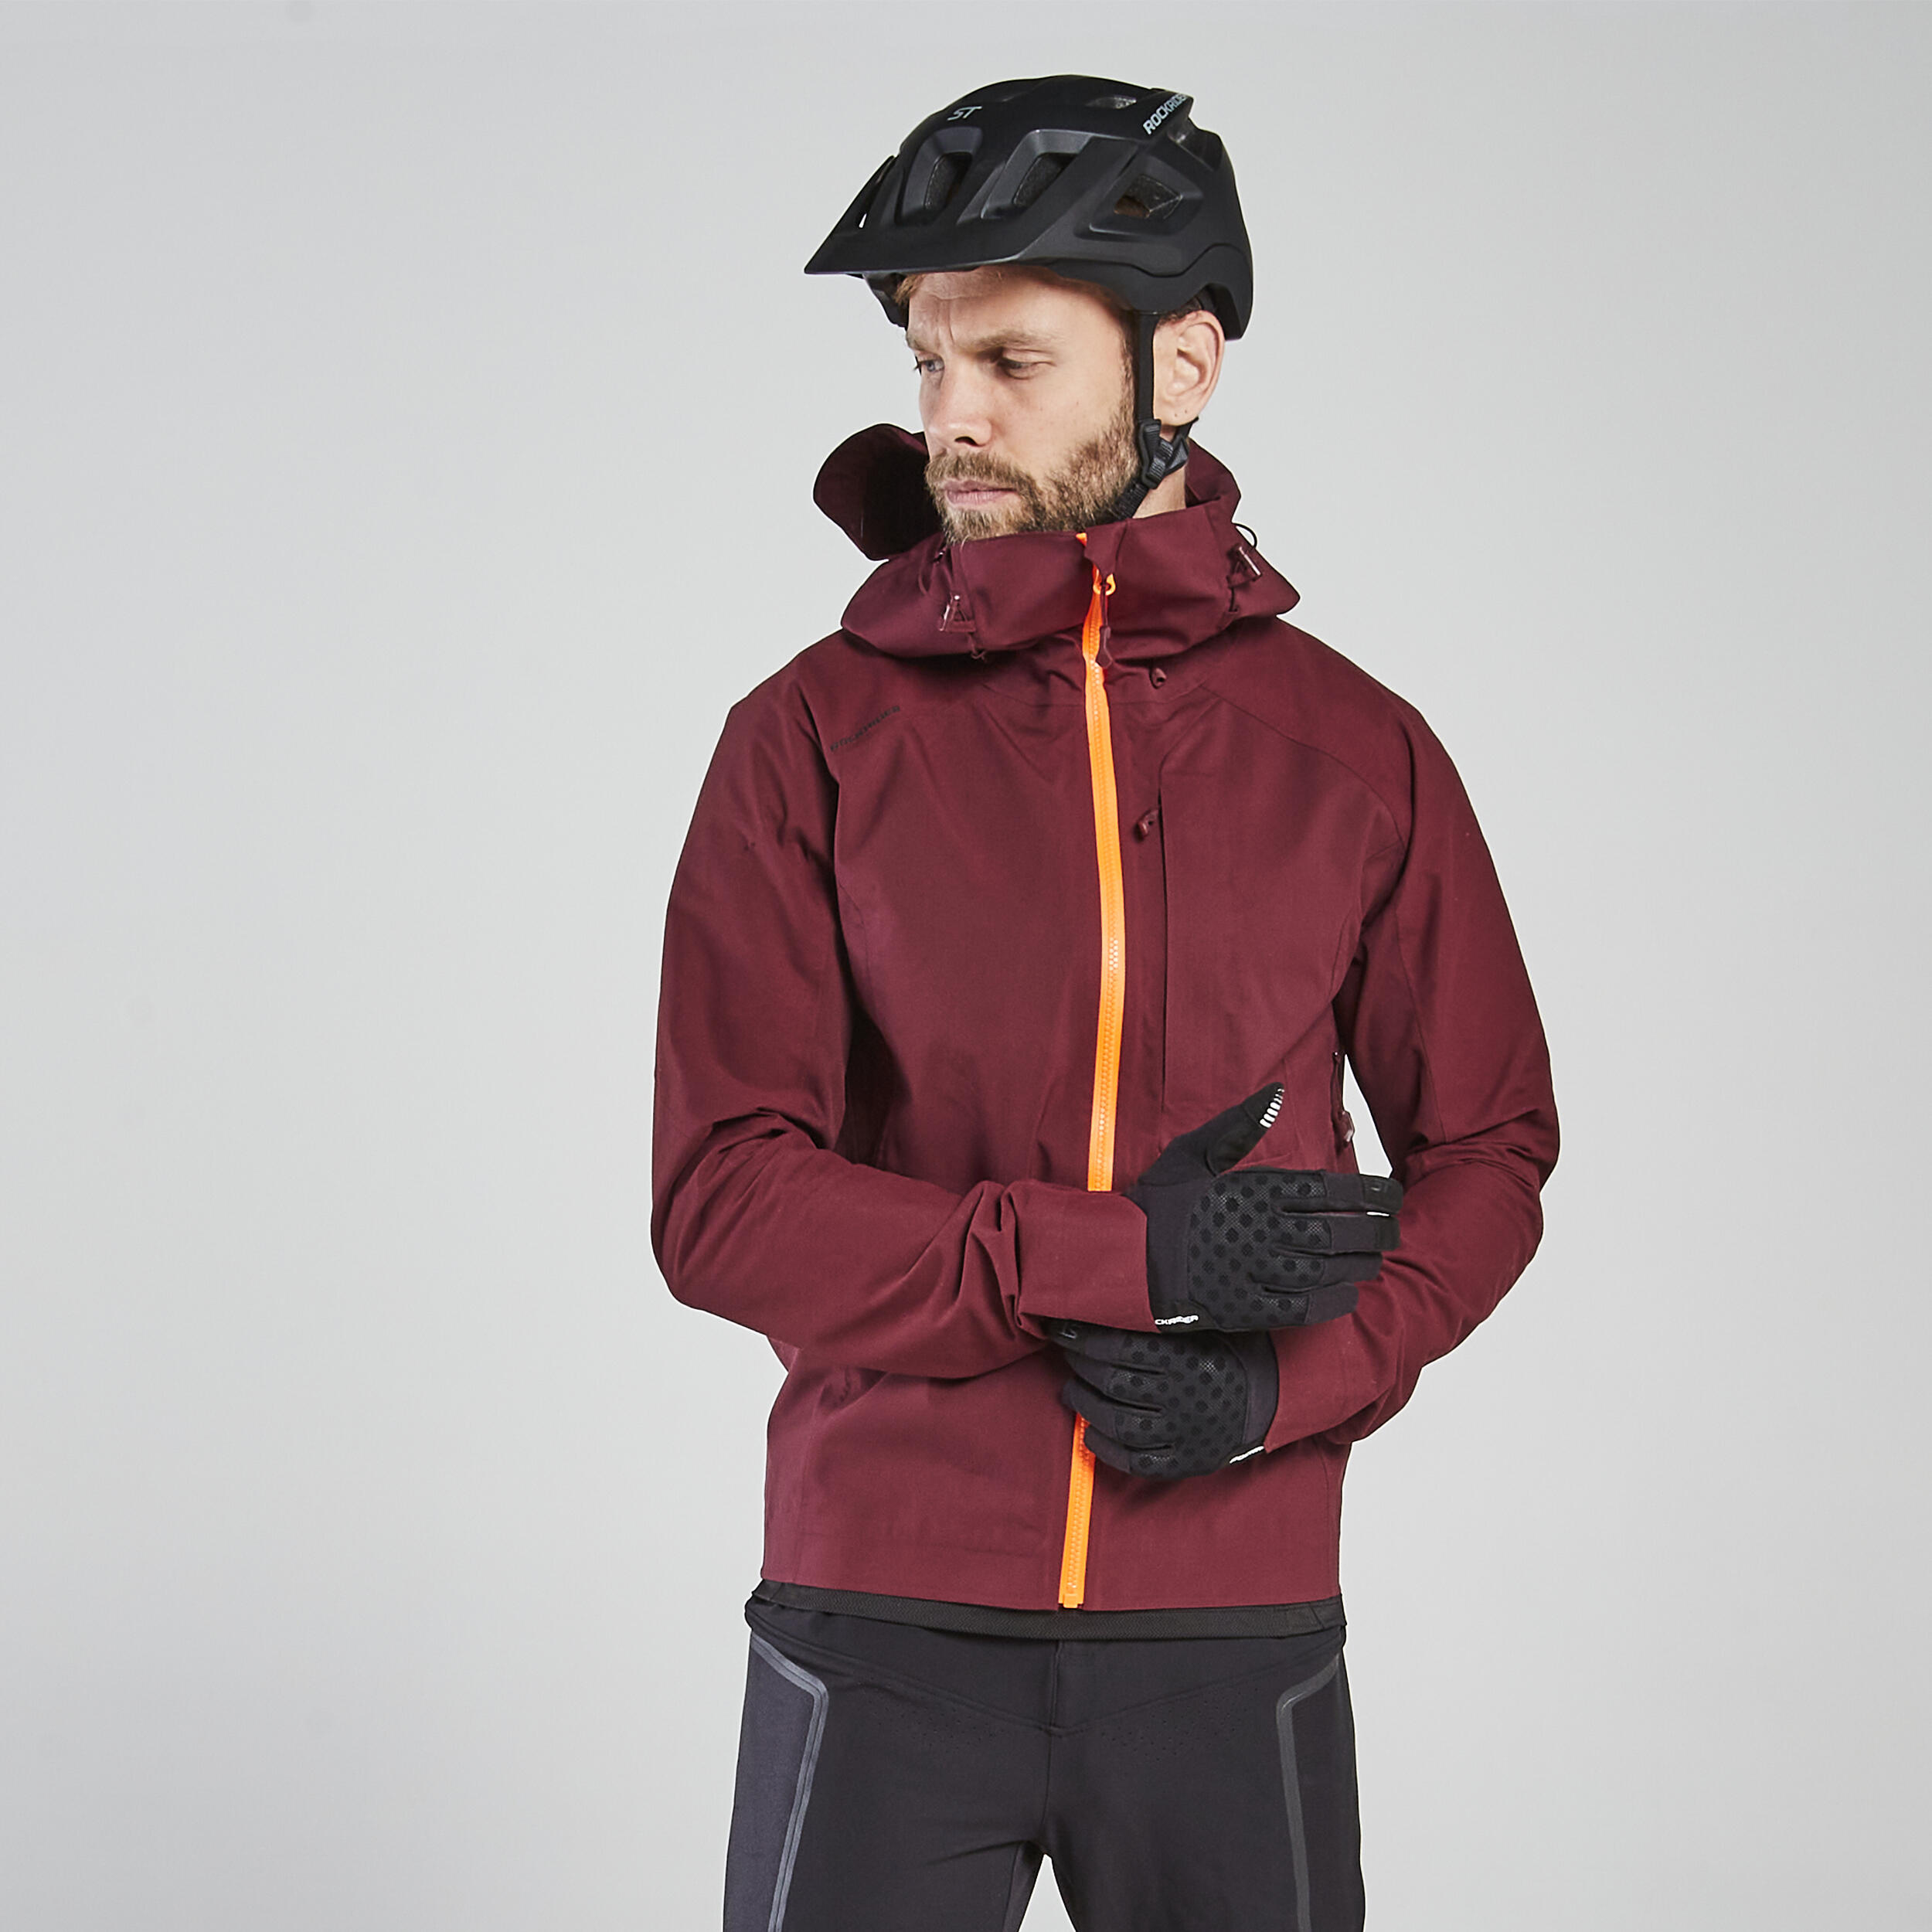 Nuova giacca invernale antivento bici ciclo mtb bike  barbieri rossa taglia xl 